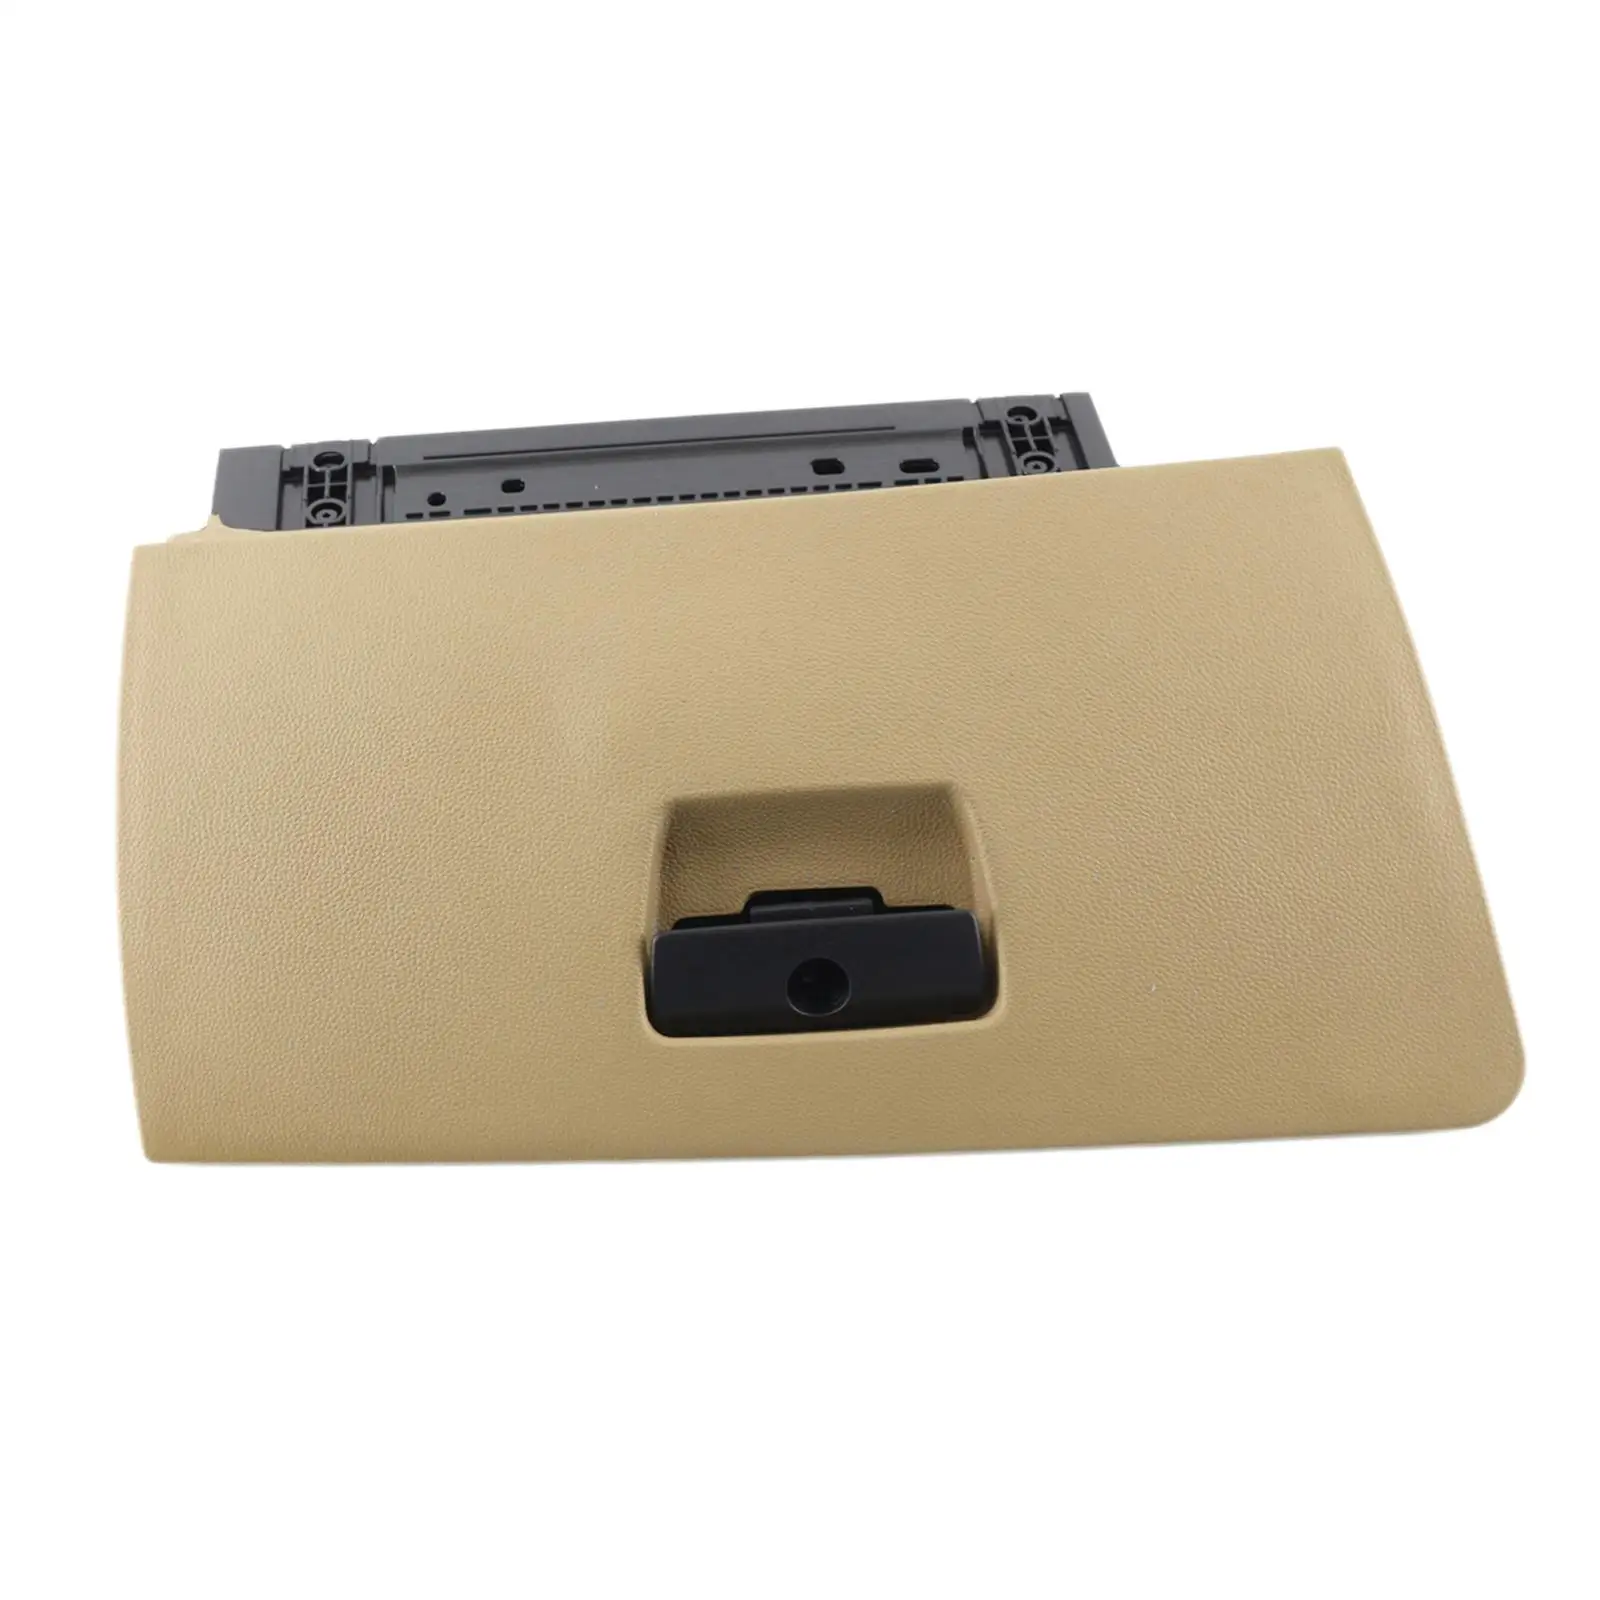 Glovebox Replaces Premium Professional Spare Parts Durable Portable Glove Box Storage Compartment for BMW E90 D91 E92 06-13